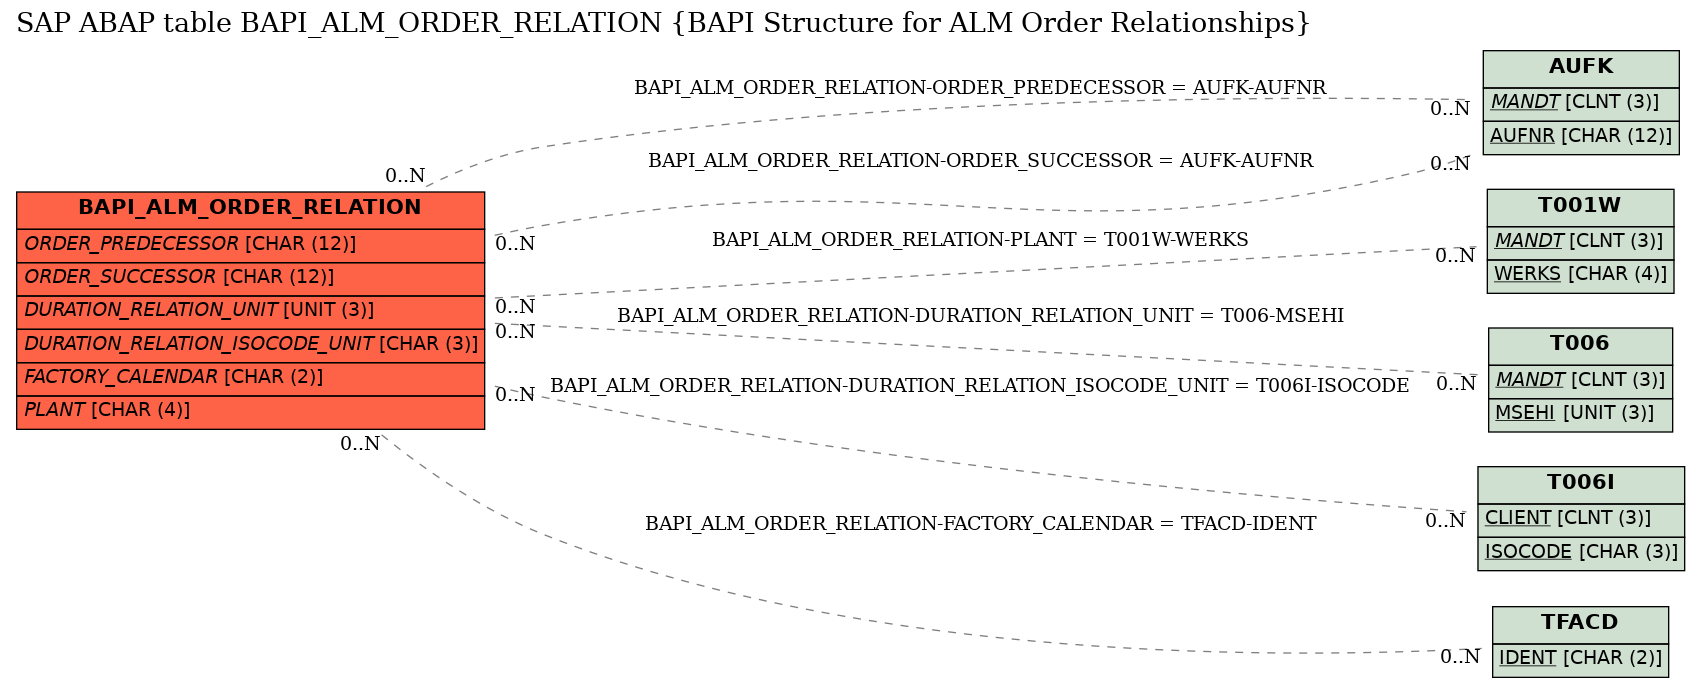 E-R Diagram for table BAPI_ALM_ORDER_RELATION (BAPI Structure for ALM Order Relationships)